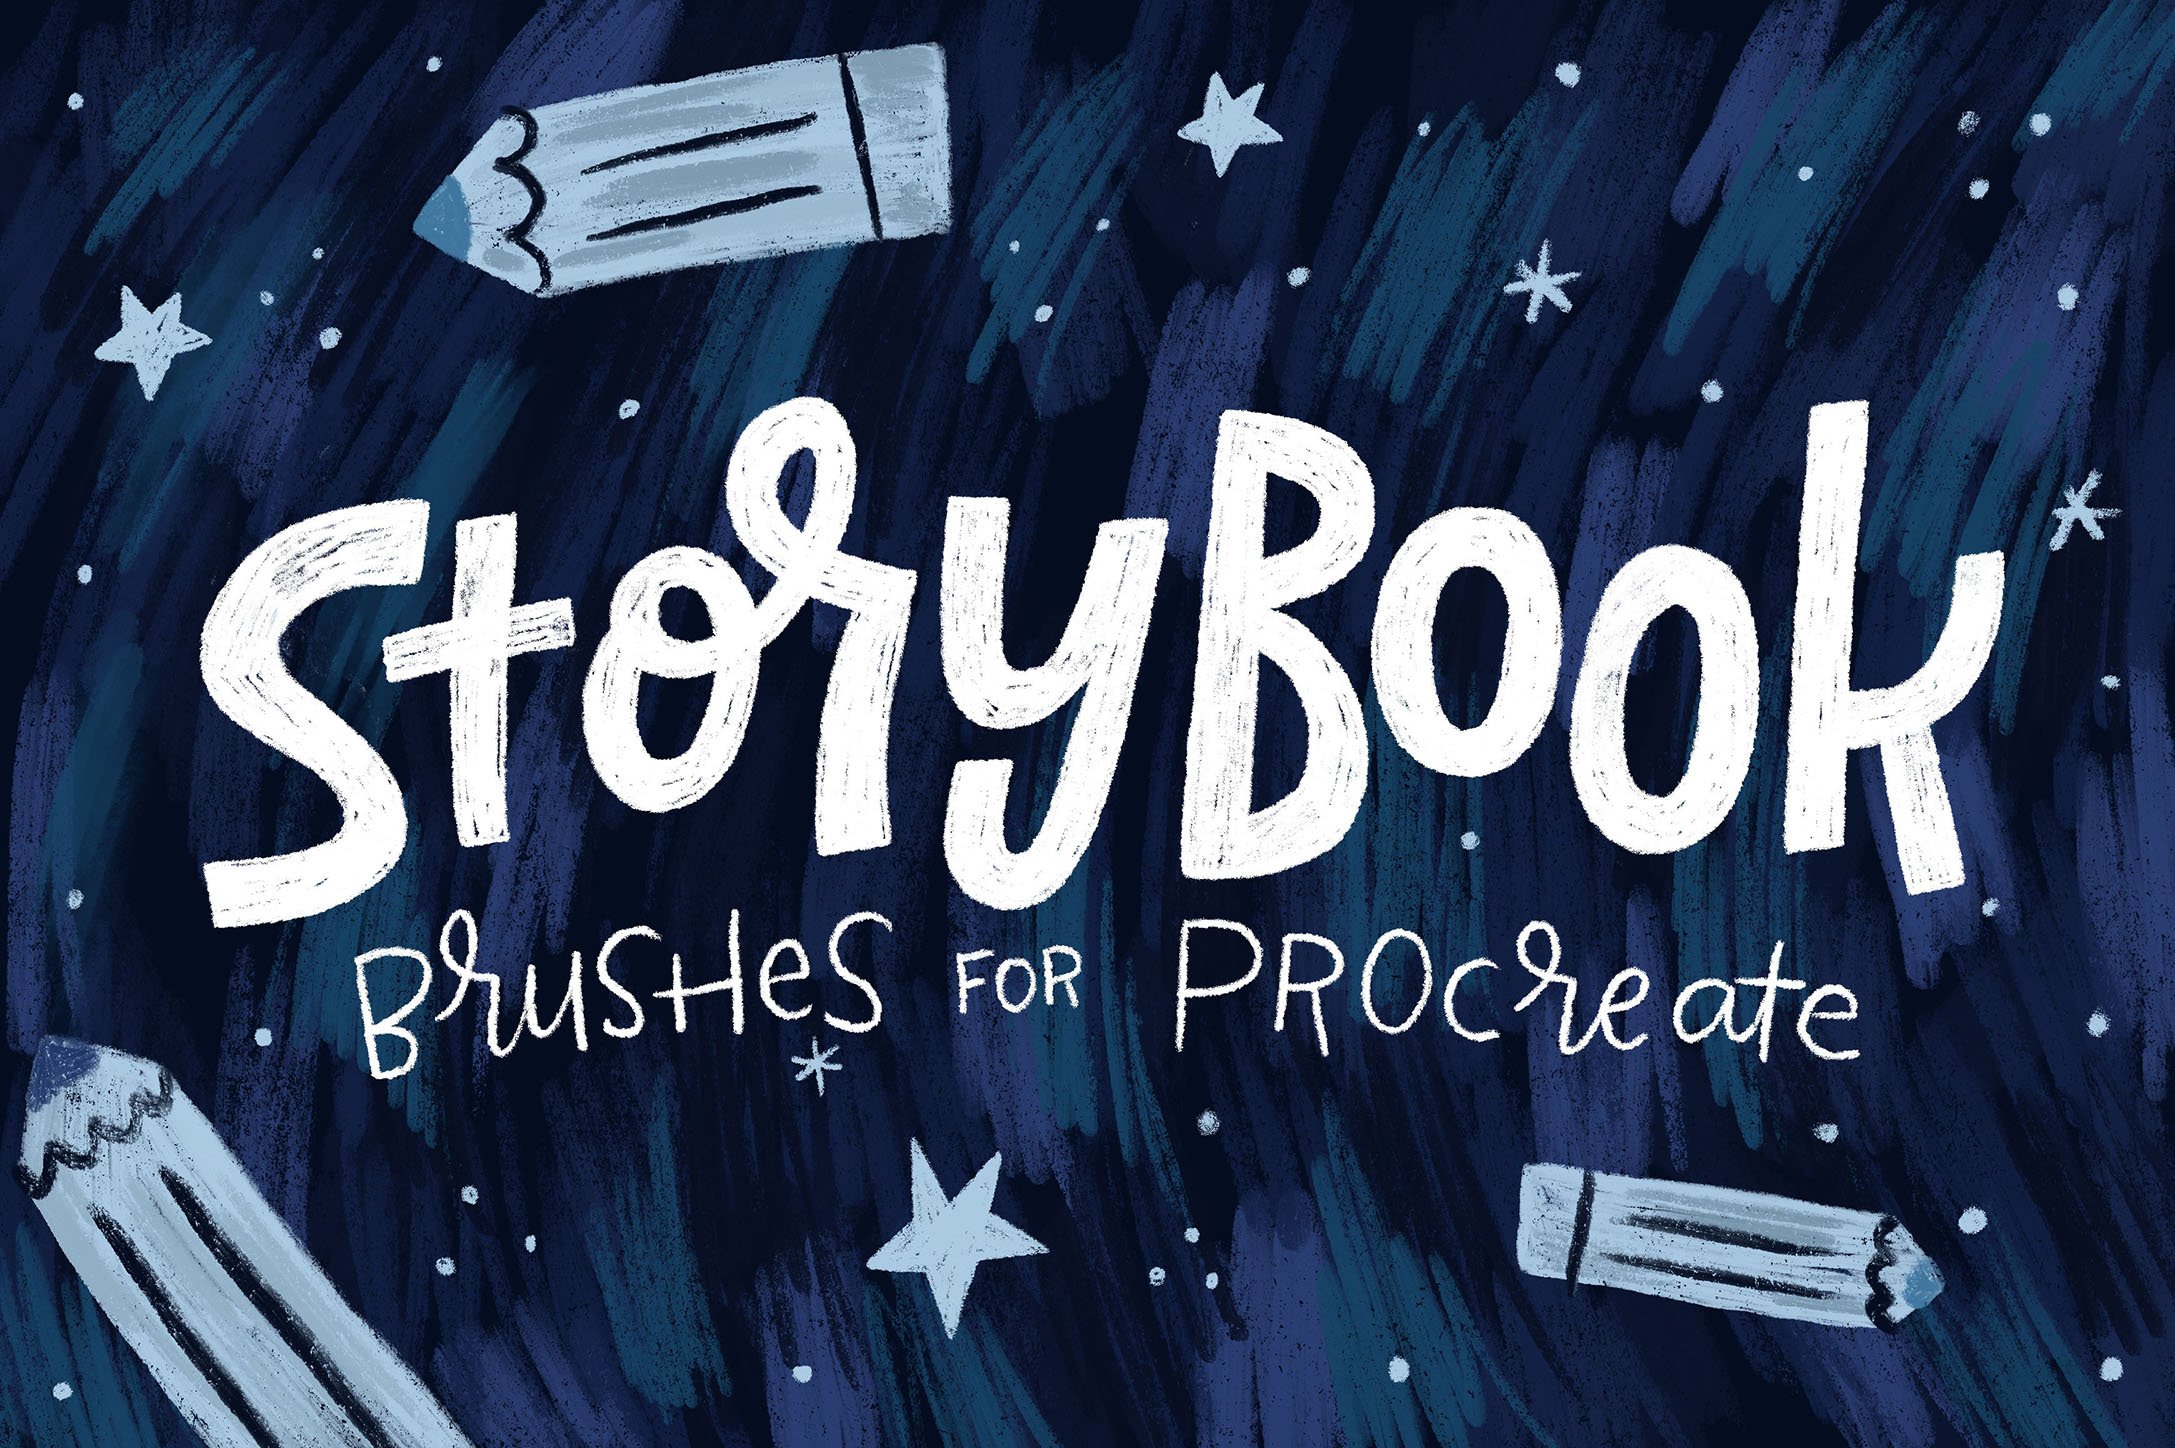 Storybook Brushes for Procreate